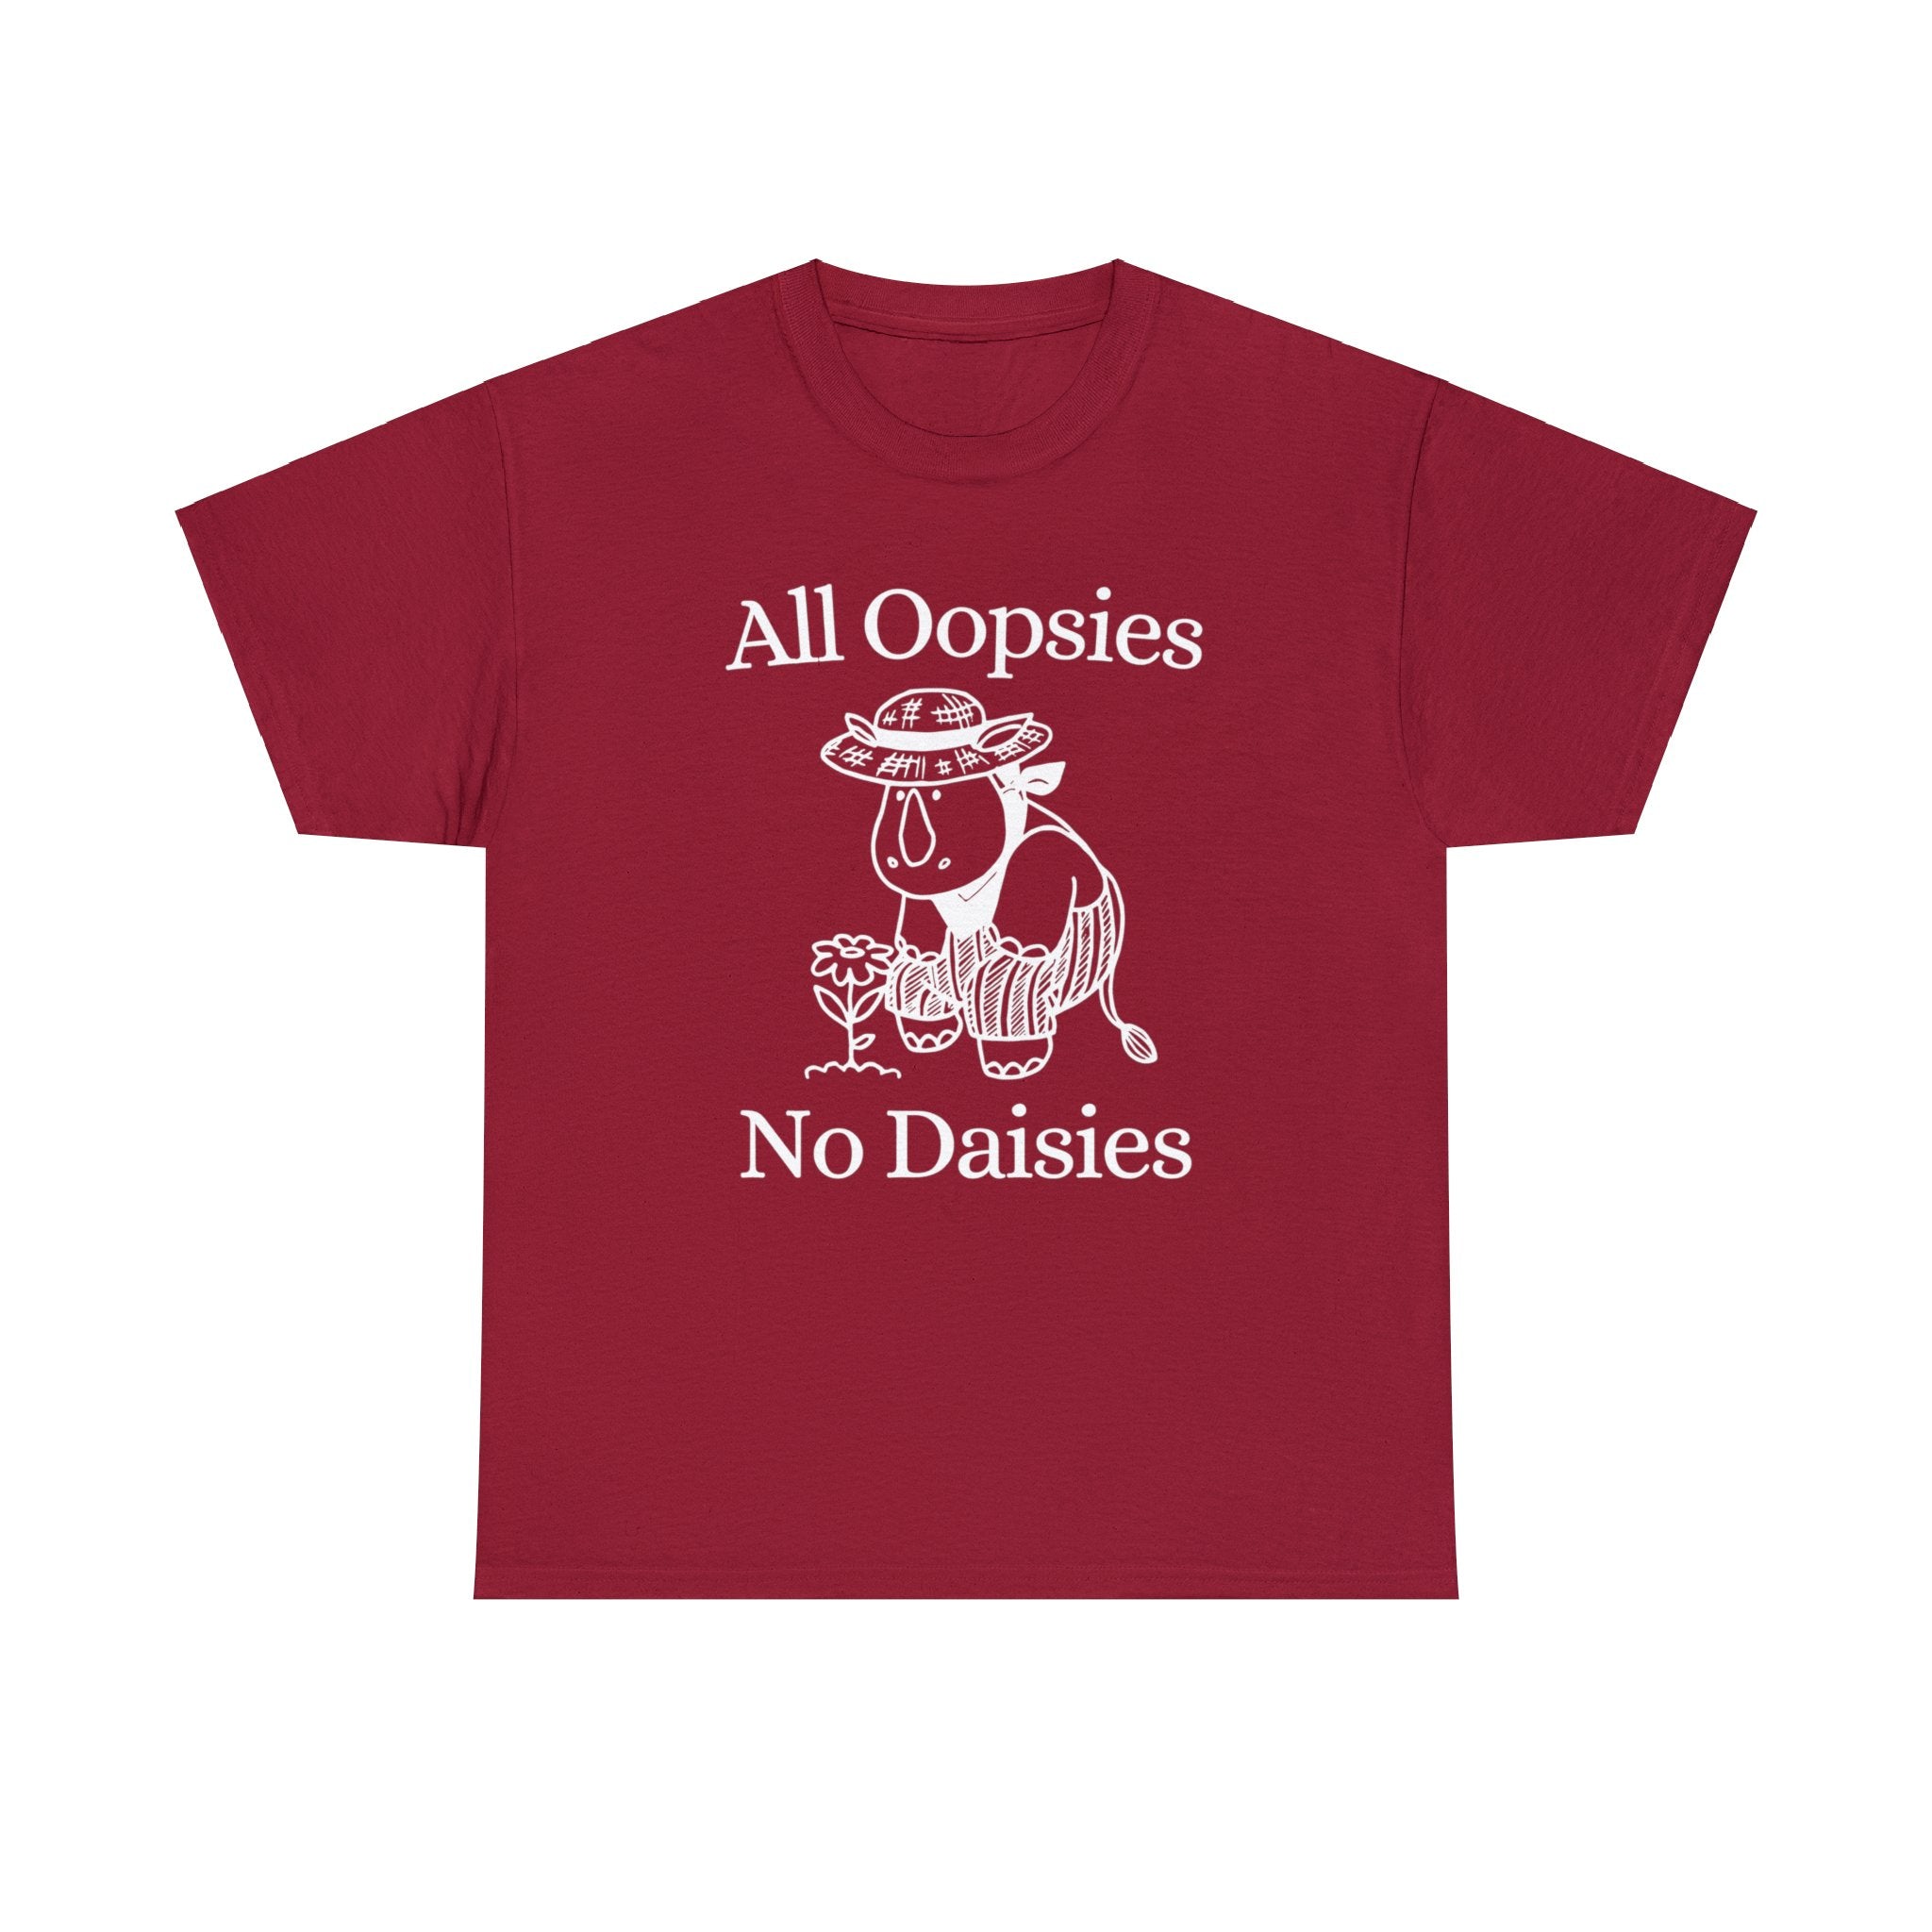 All oopsies no daisies | graphic tee | funny shirt | vintage shirt | sarcastic t-shirt retro cartoon tee